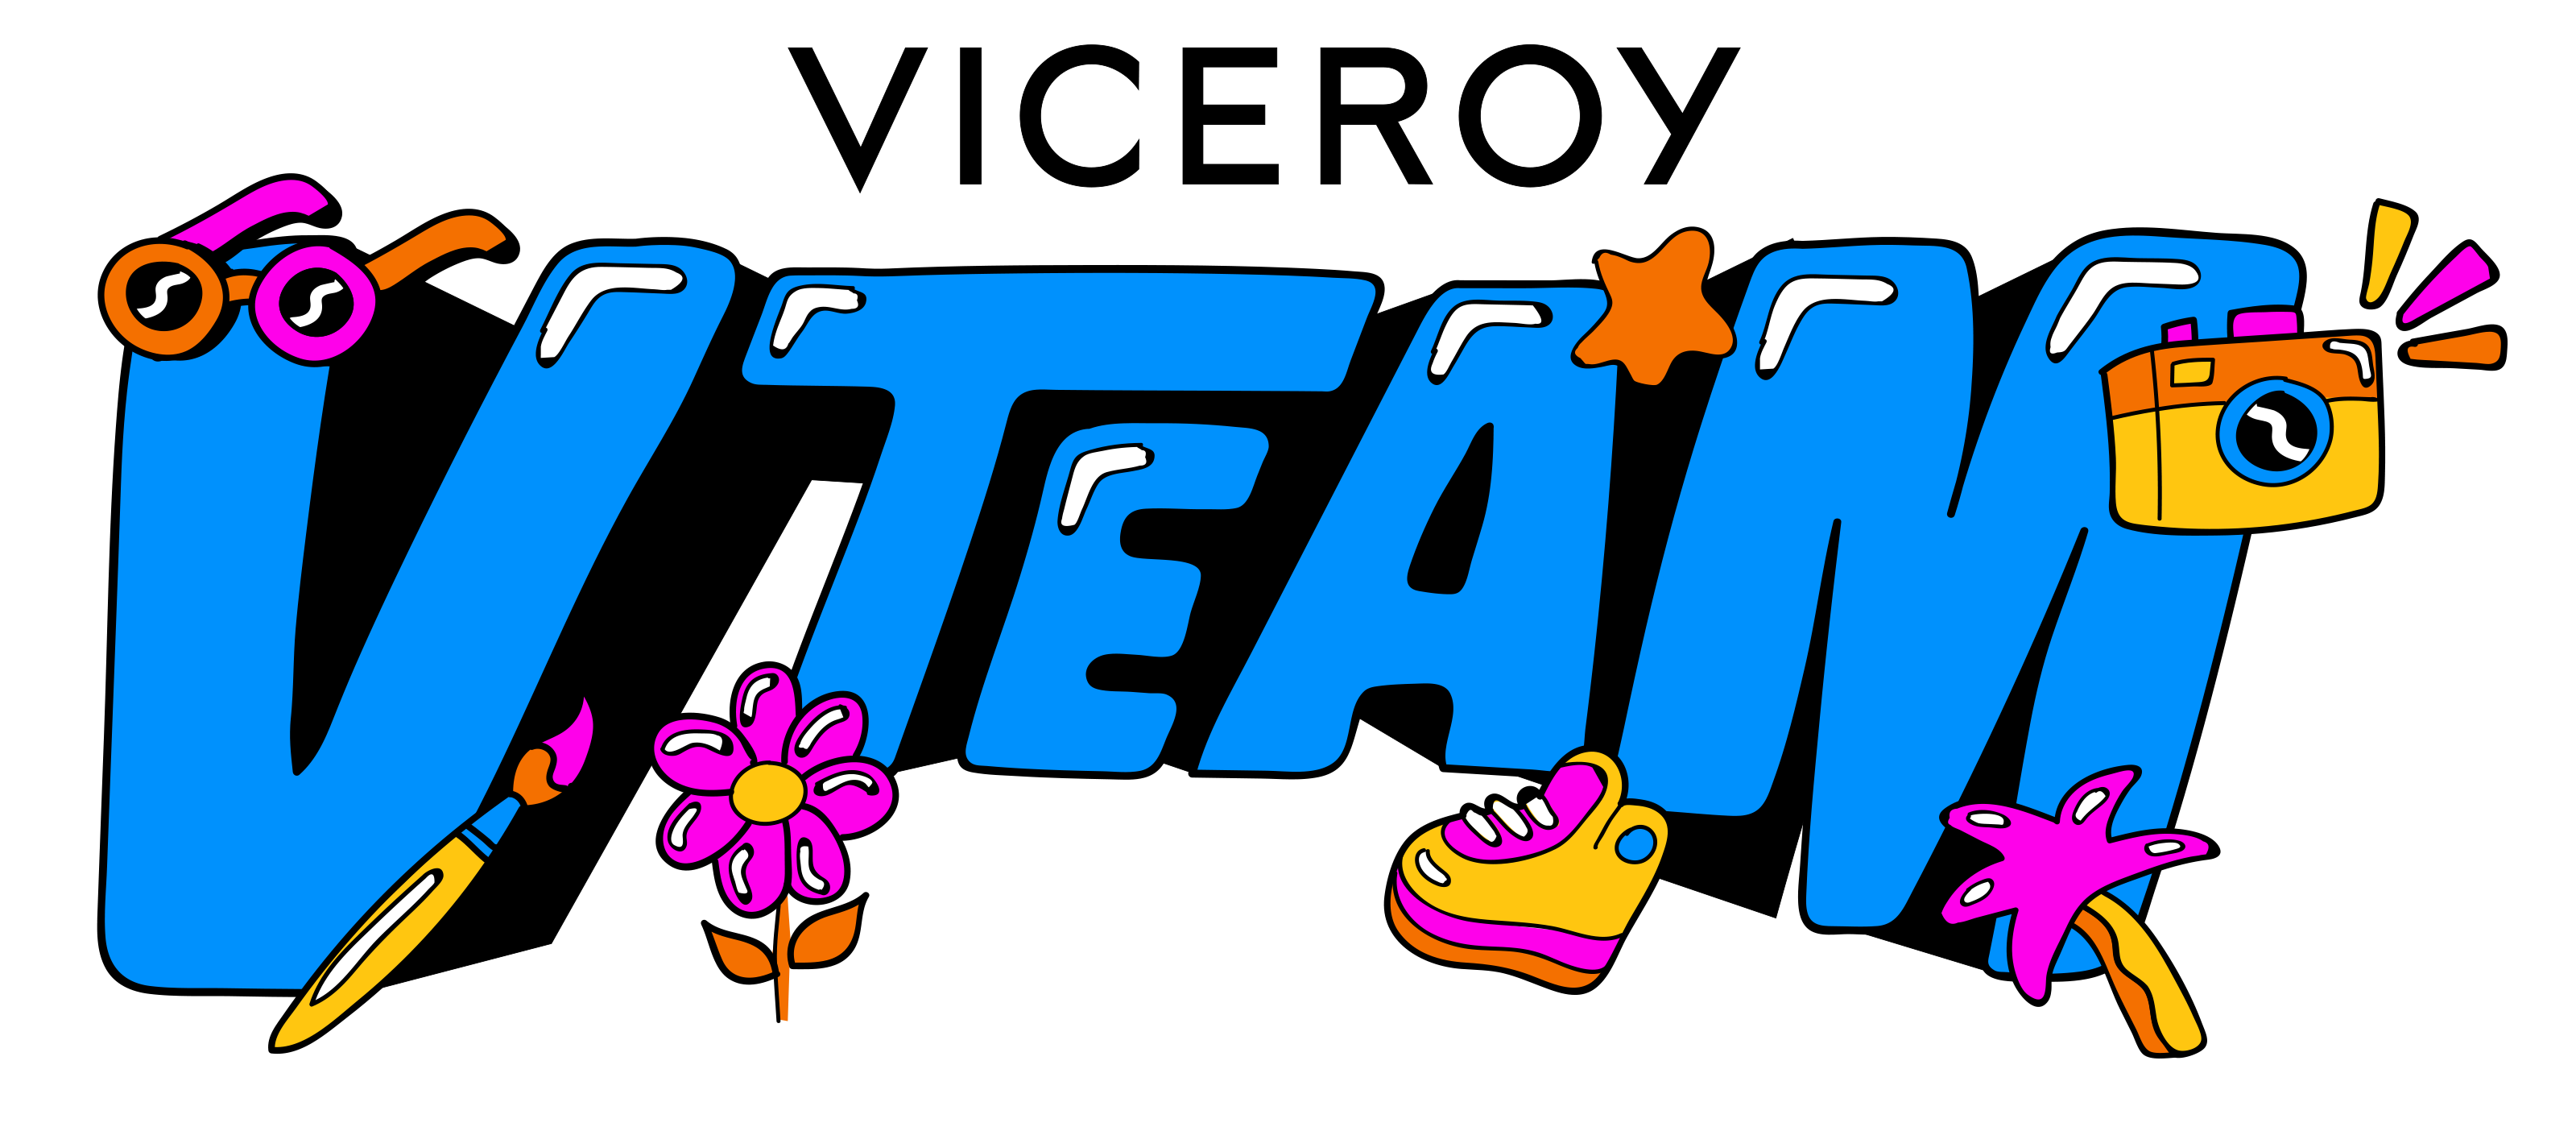 Viceroy V Team - Logo